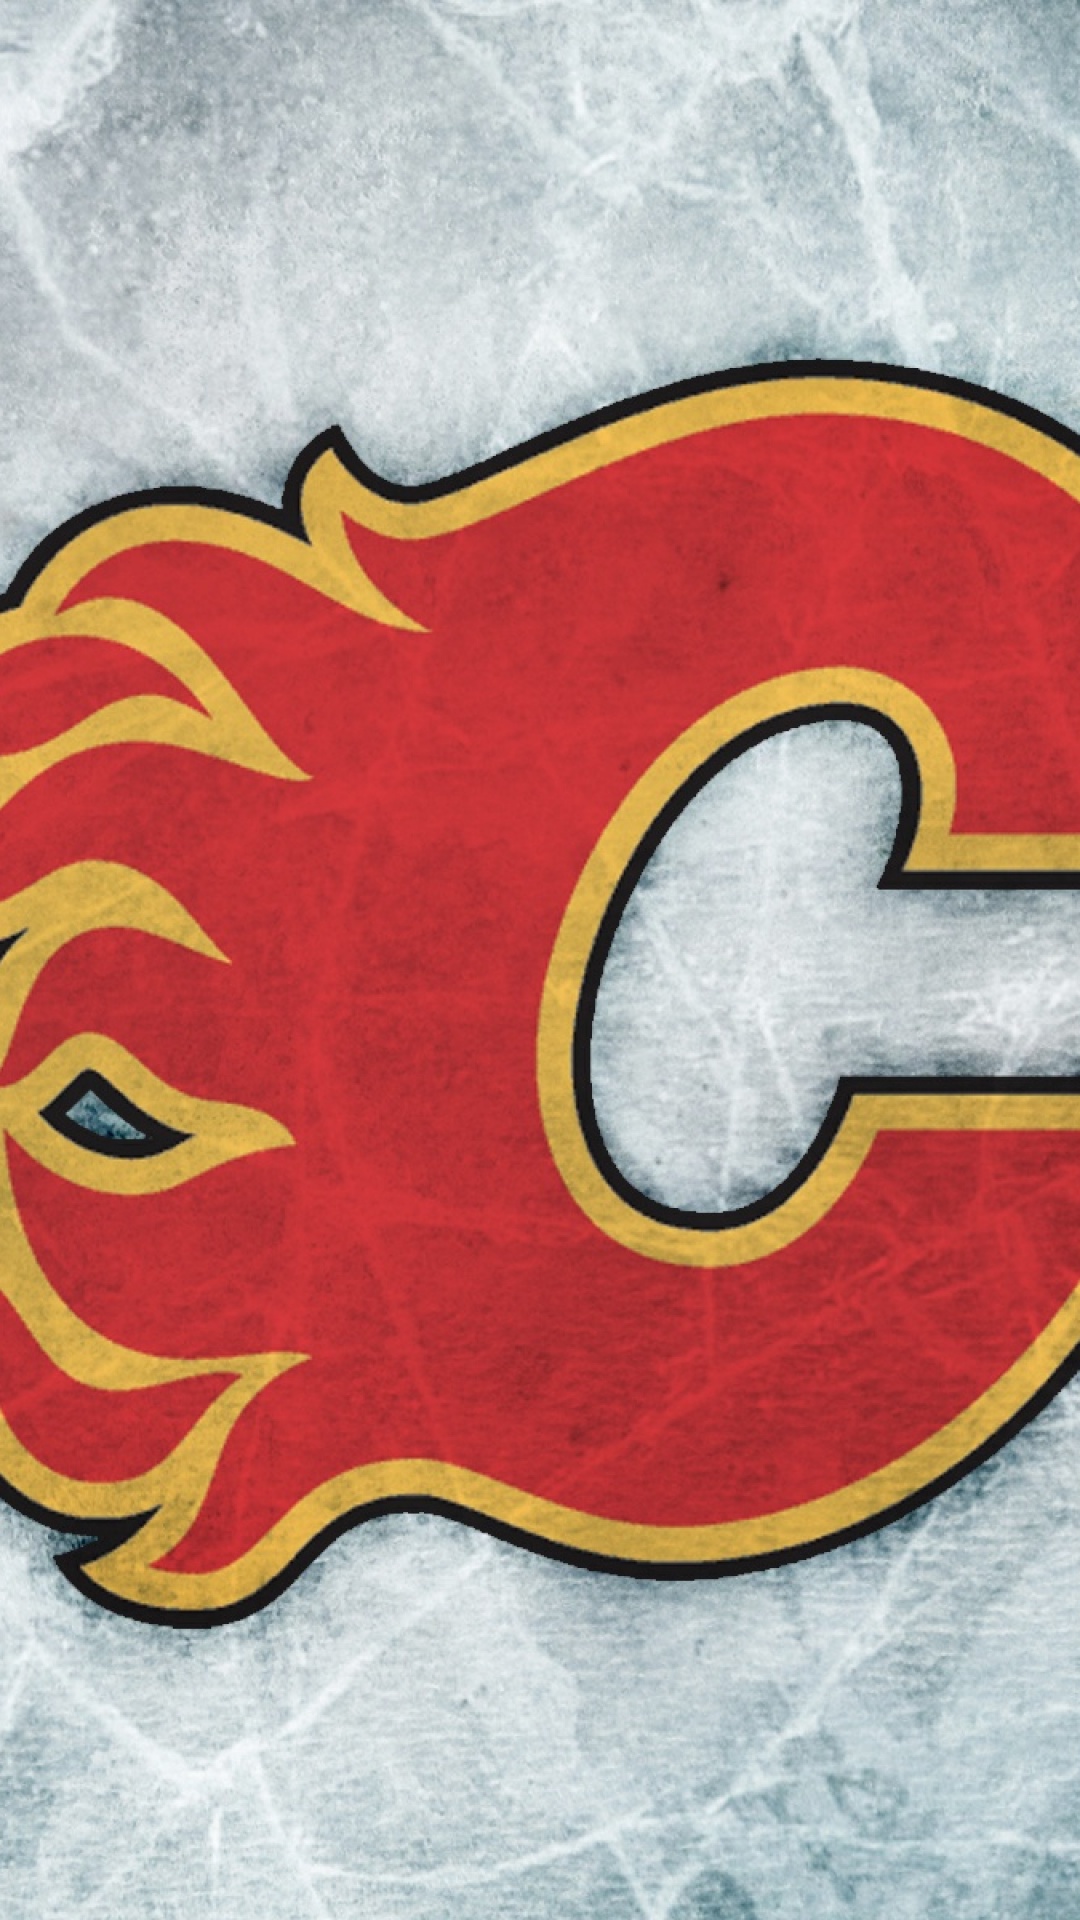 Calgary Flames iPhone 5 Wallpaper | ID: 25613